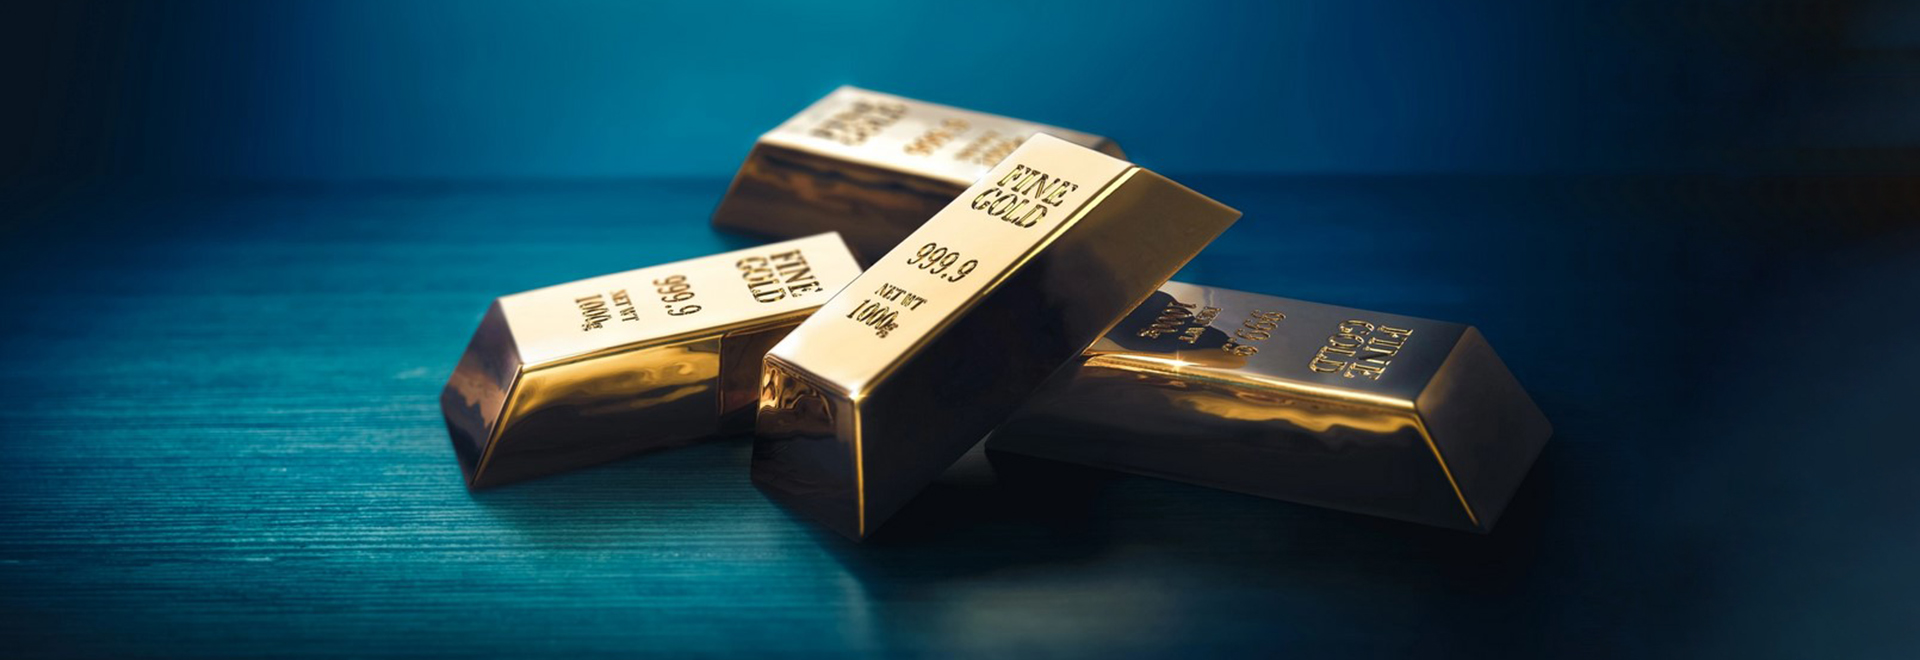 Gold struggles ahead of US data